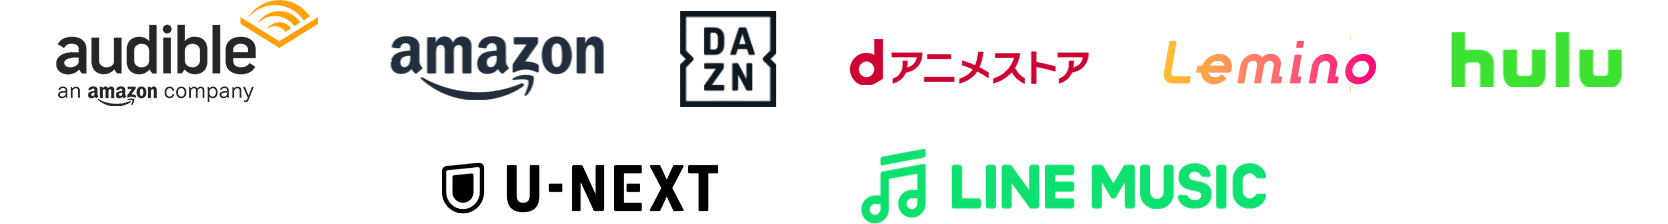 Amazonオーディブル Amazonプライム DAZN dアニメストア Leminoプレミアム hulu U-NEXT LINE MUSIC